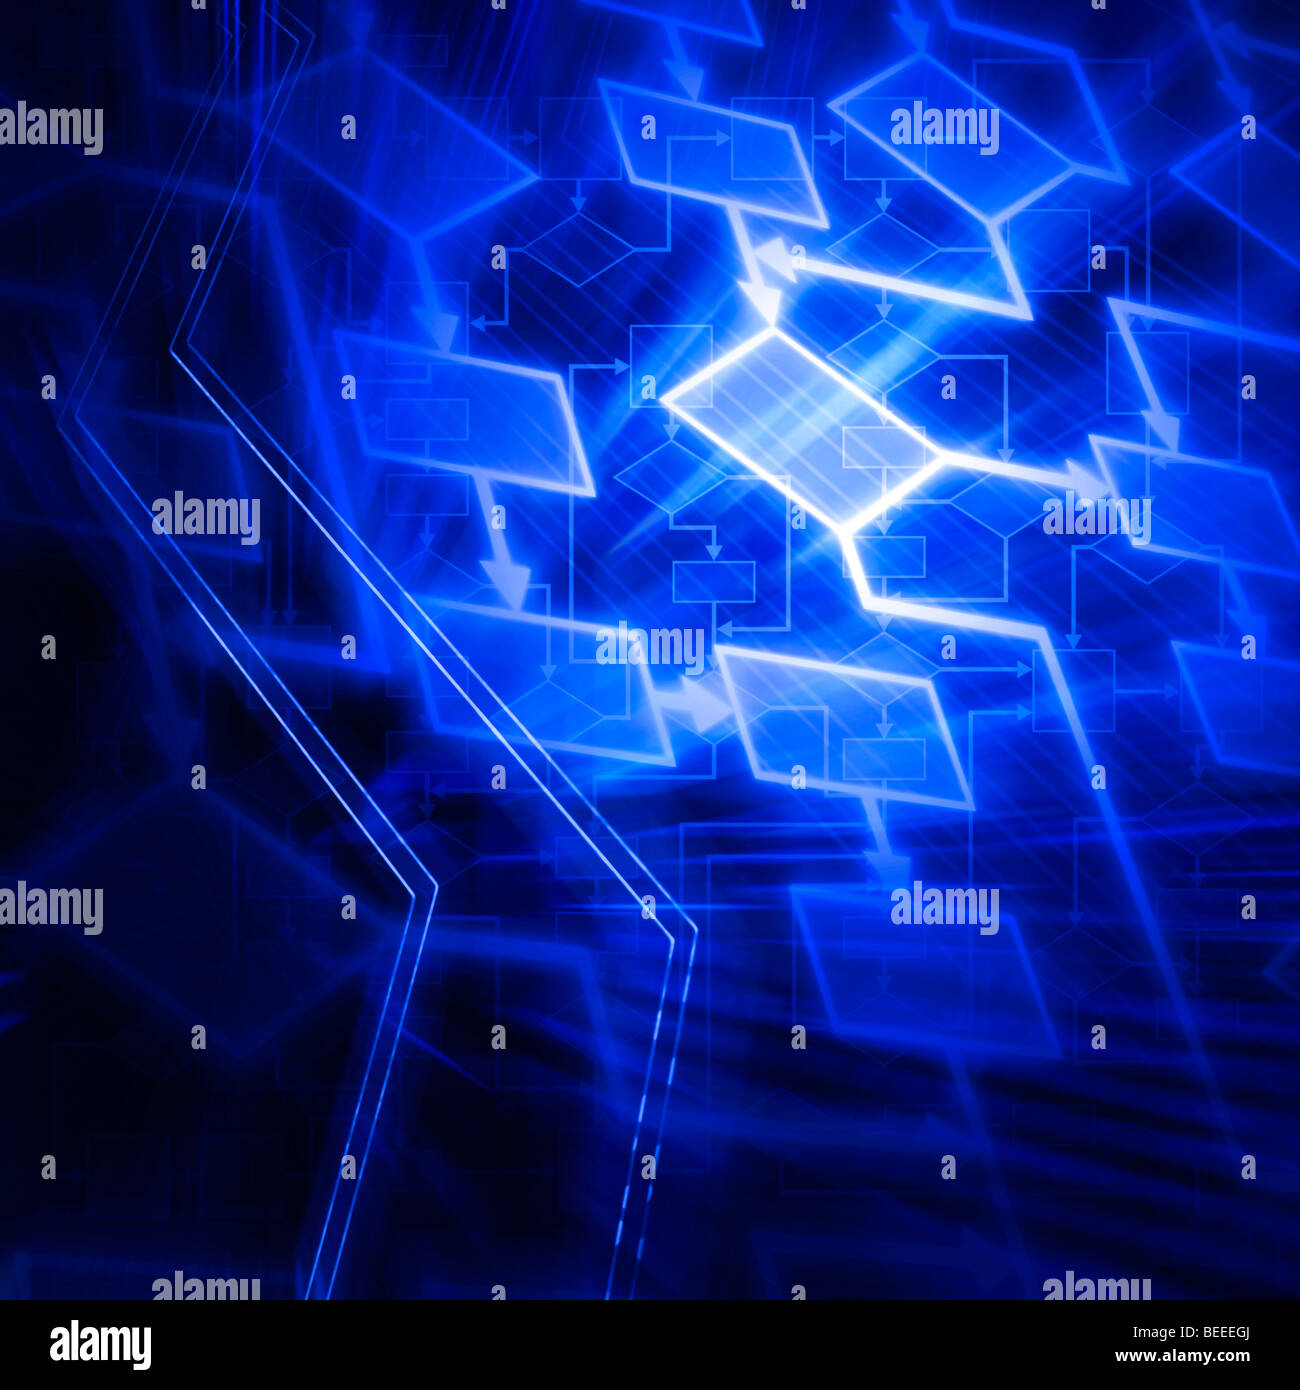 Glowing blue flowchart diagram conceptual background Stock Photo